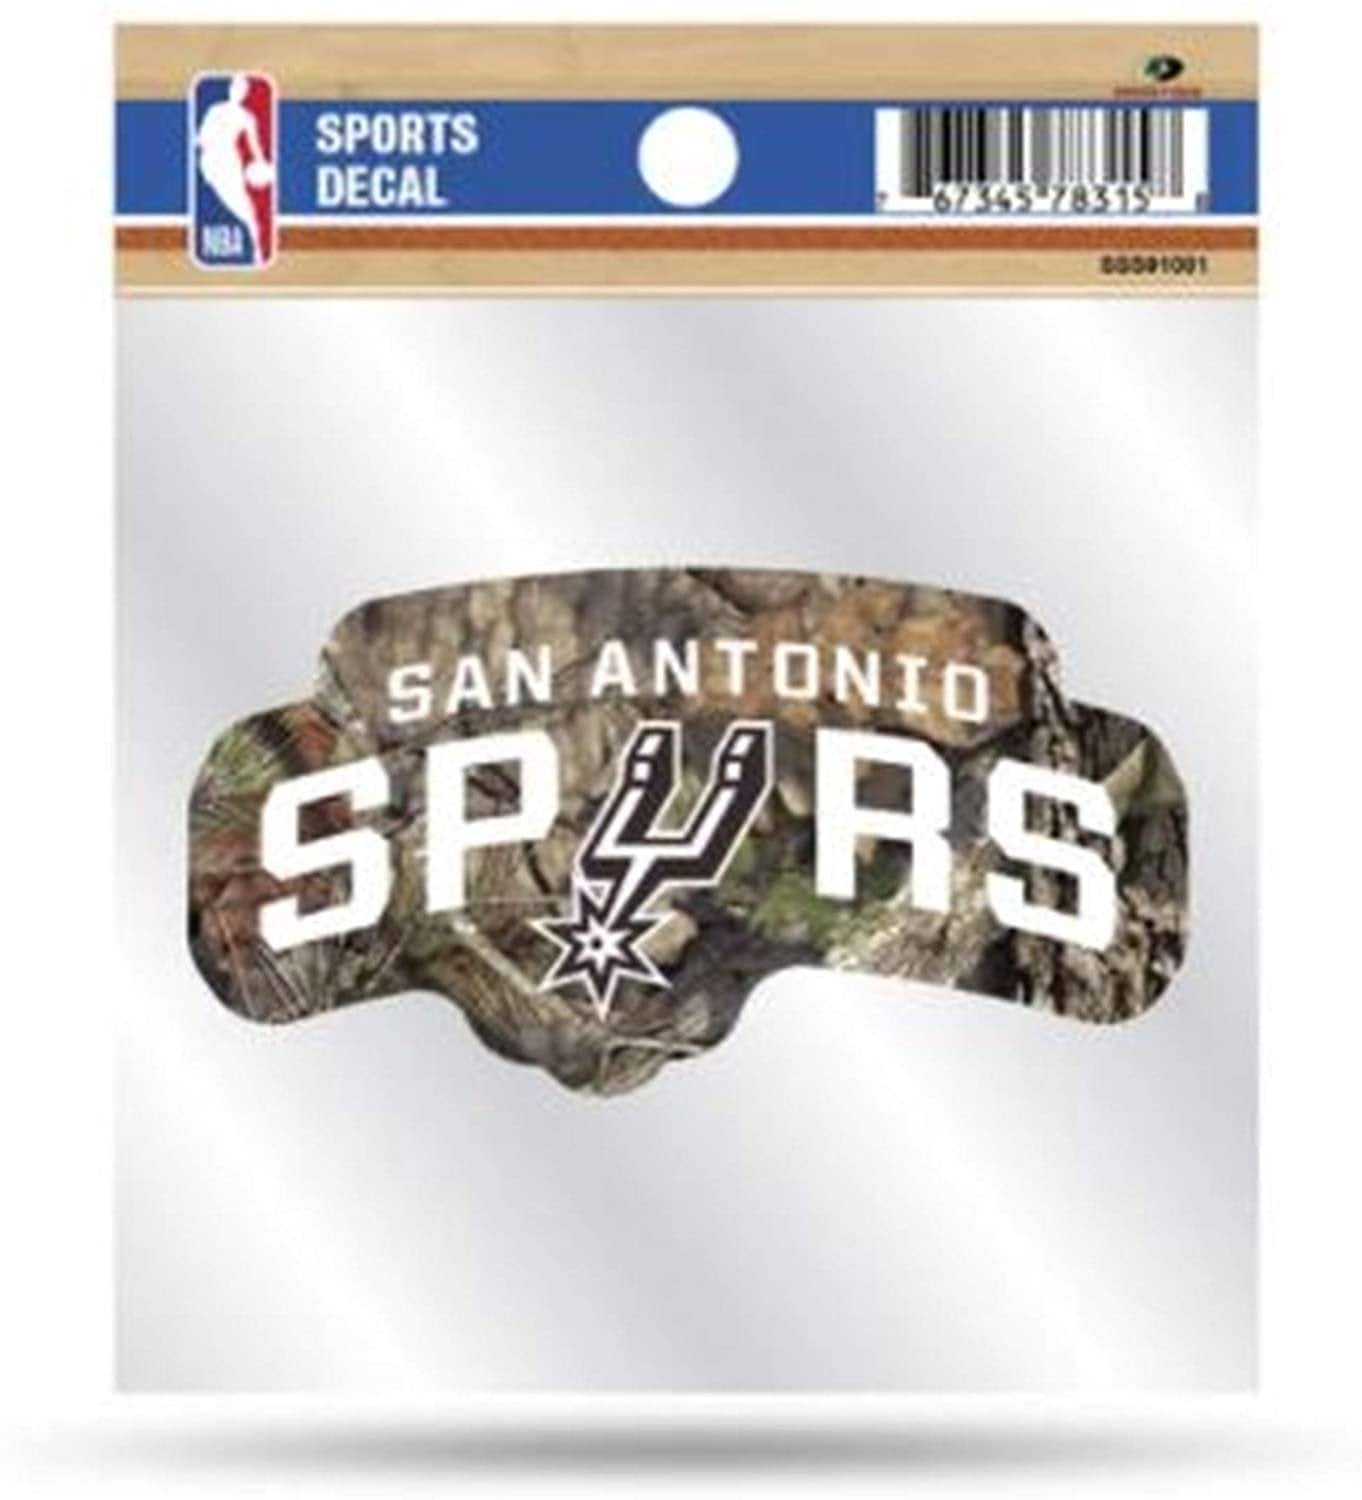 San Antonio Spurs 4x4 Inch Die Cut Decal Sticker, Mossy Oak Camo Logo, Clear Backing